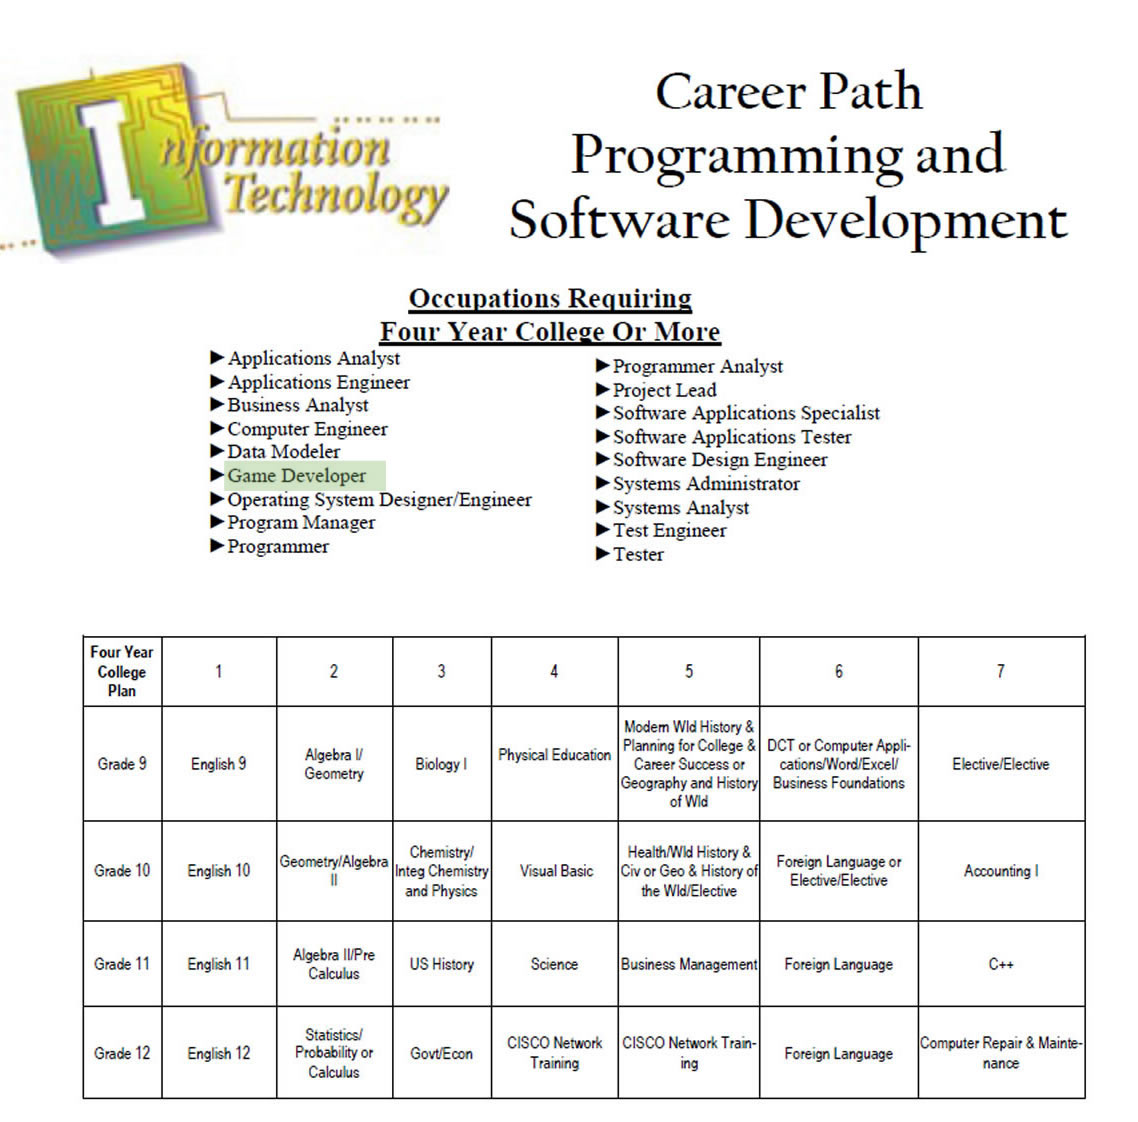 programming-software-development-art-teacher-game-college-scheduel-career-path-high-school